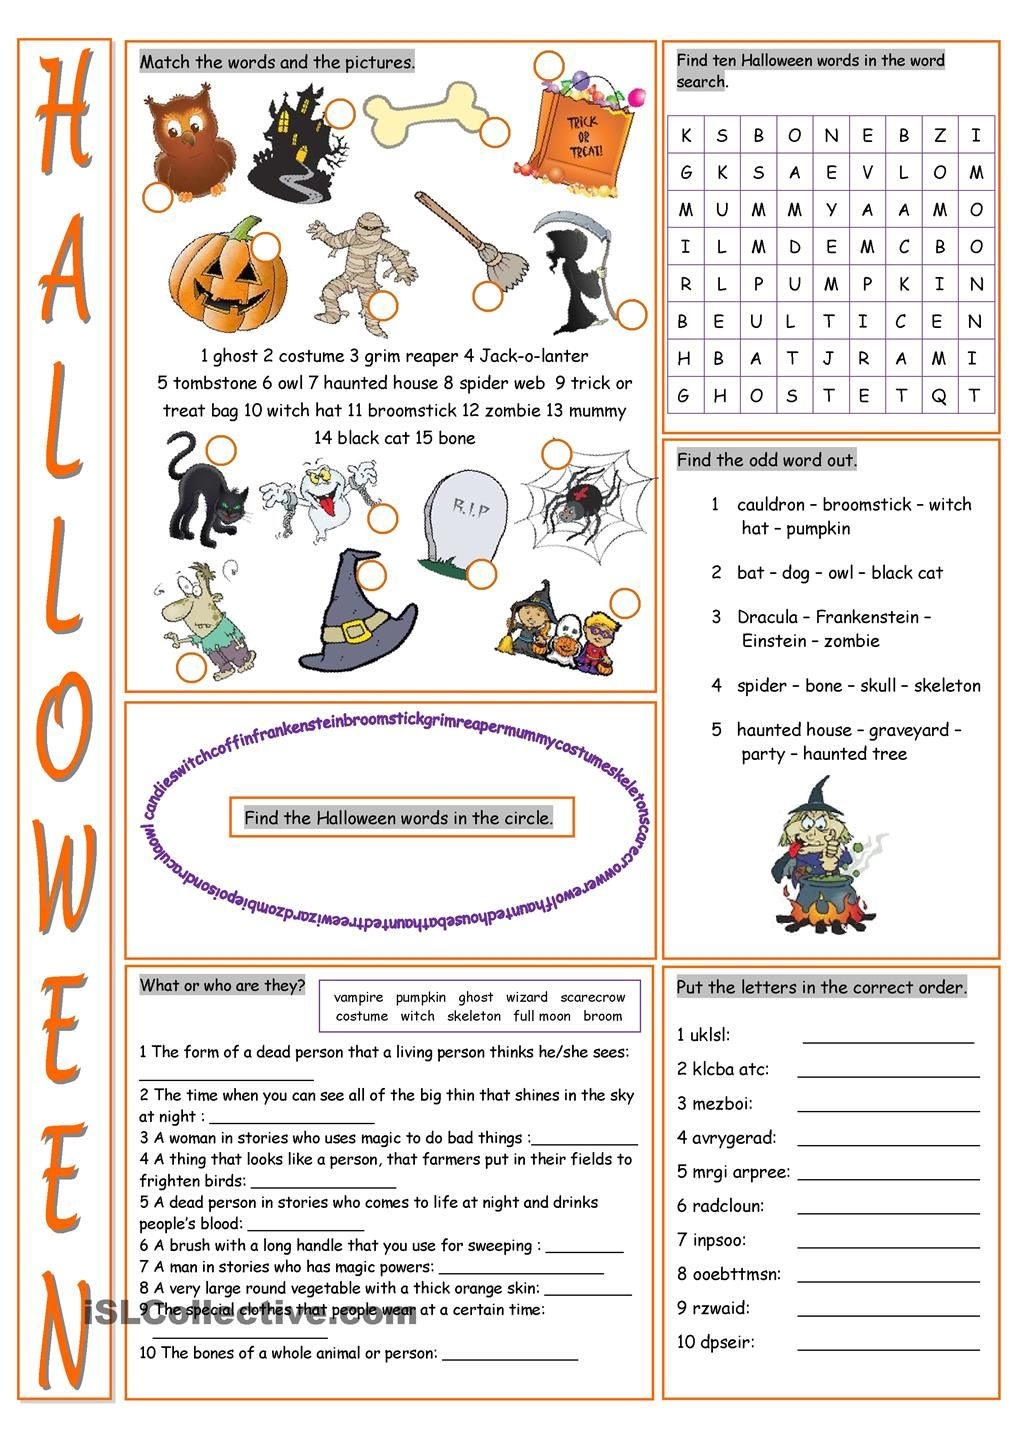 Halloween Vocabulary Exercises | Halloween Vocabulary